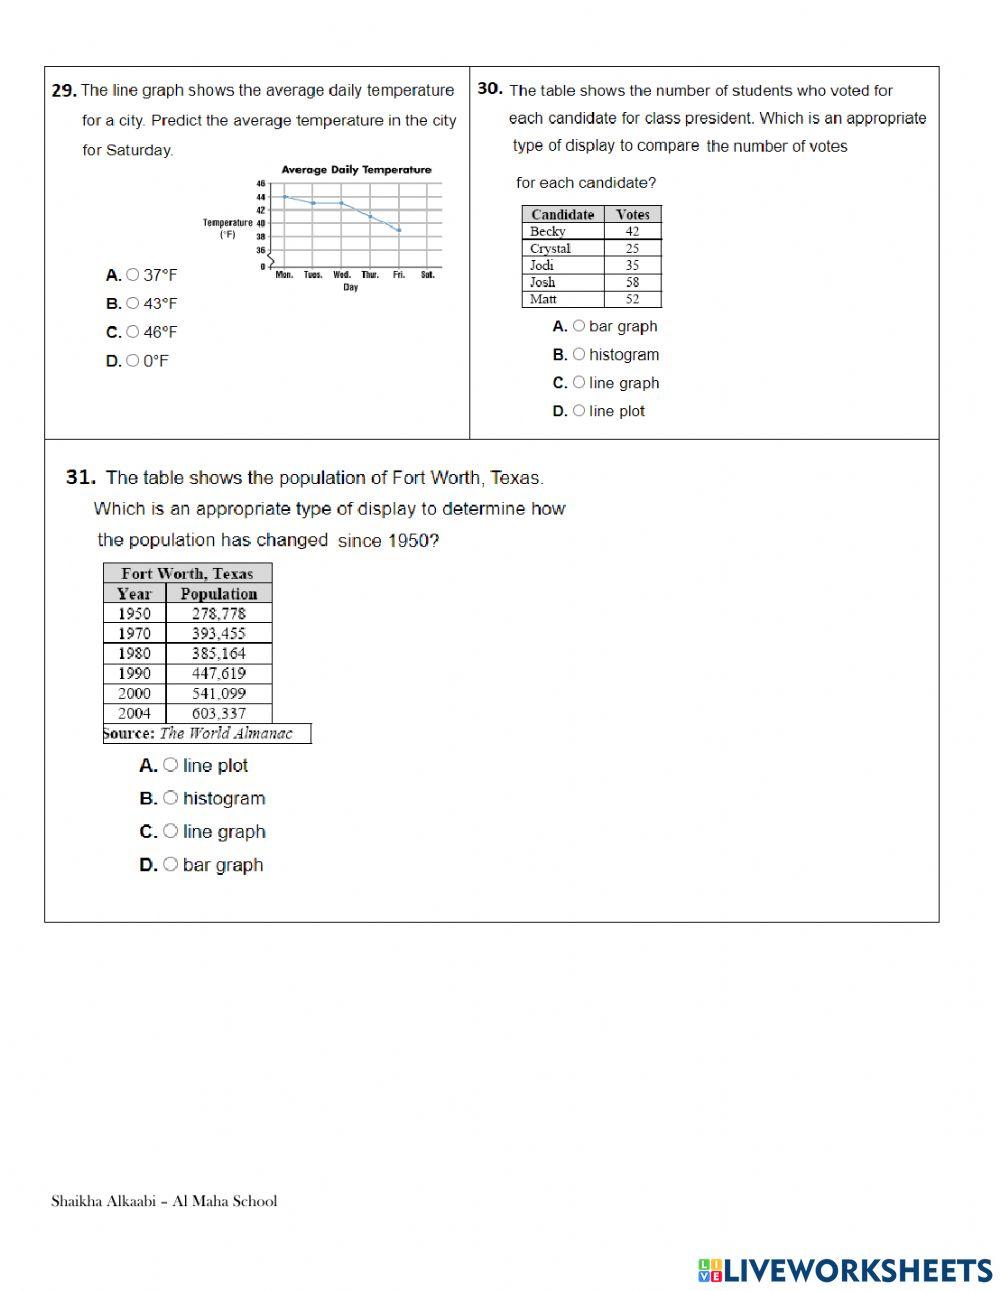 Grade 6 Elite Revision Sheet - Term 3